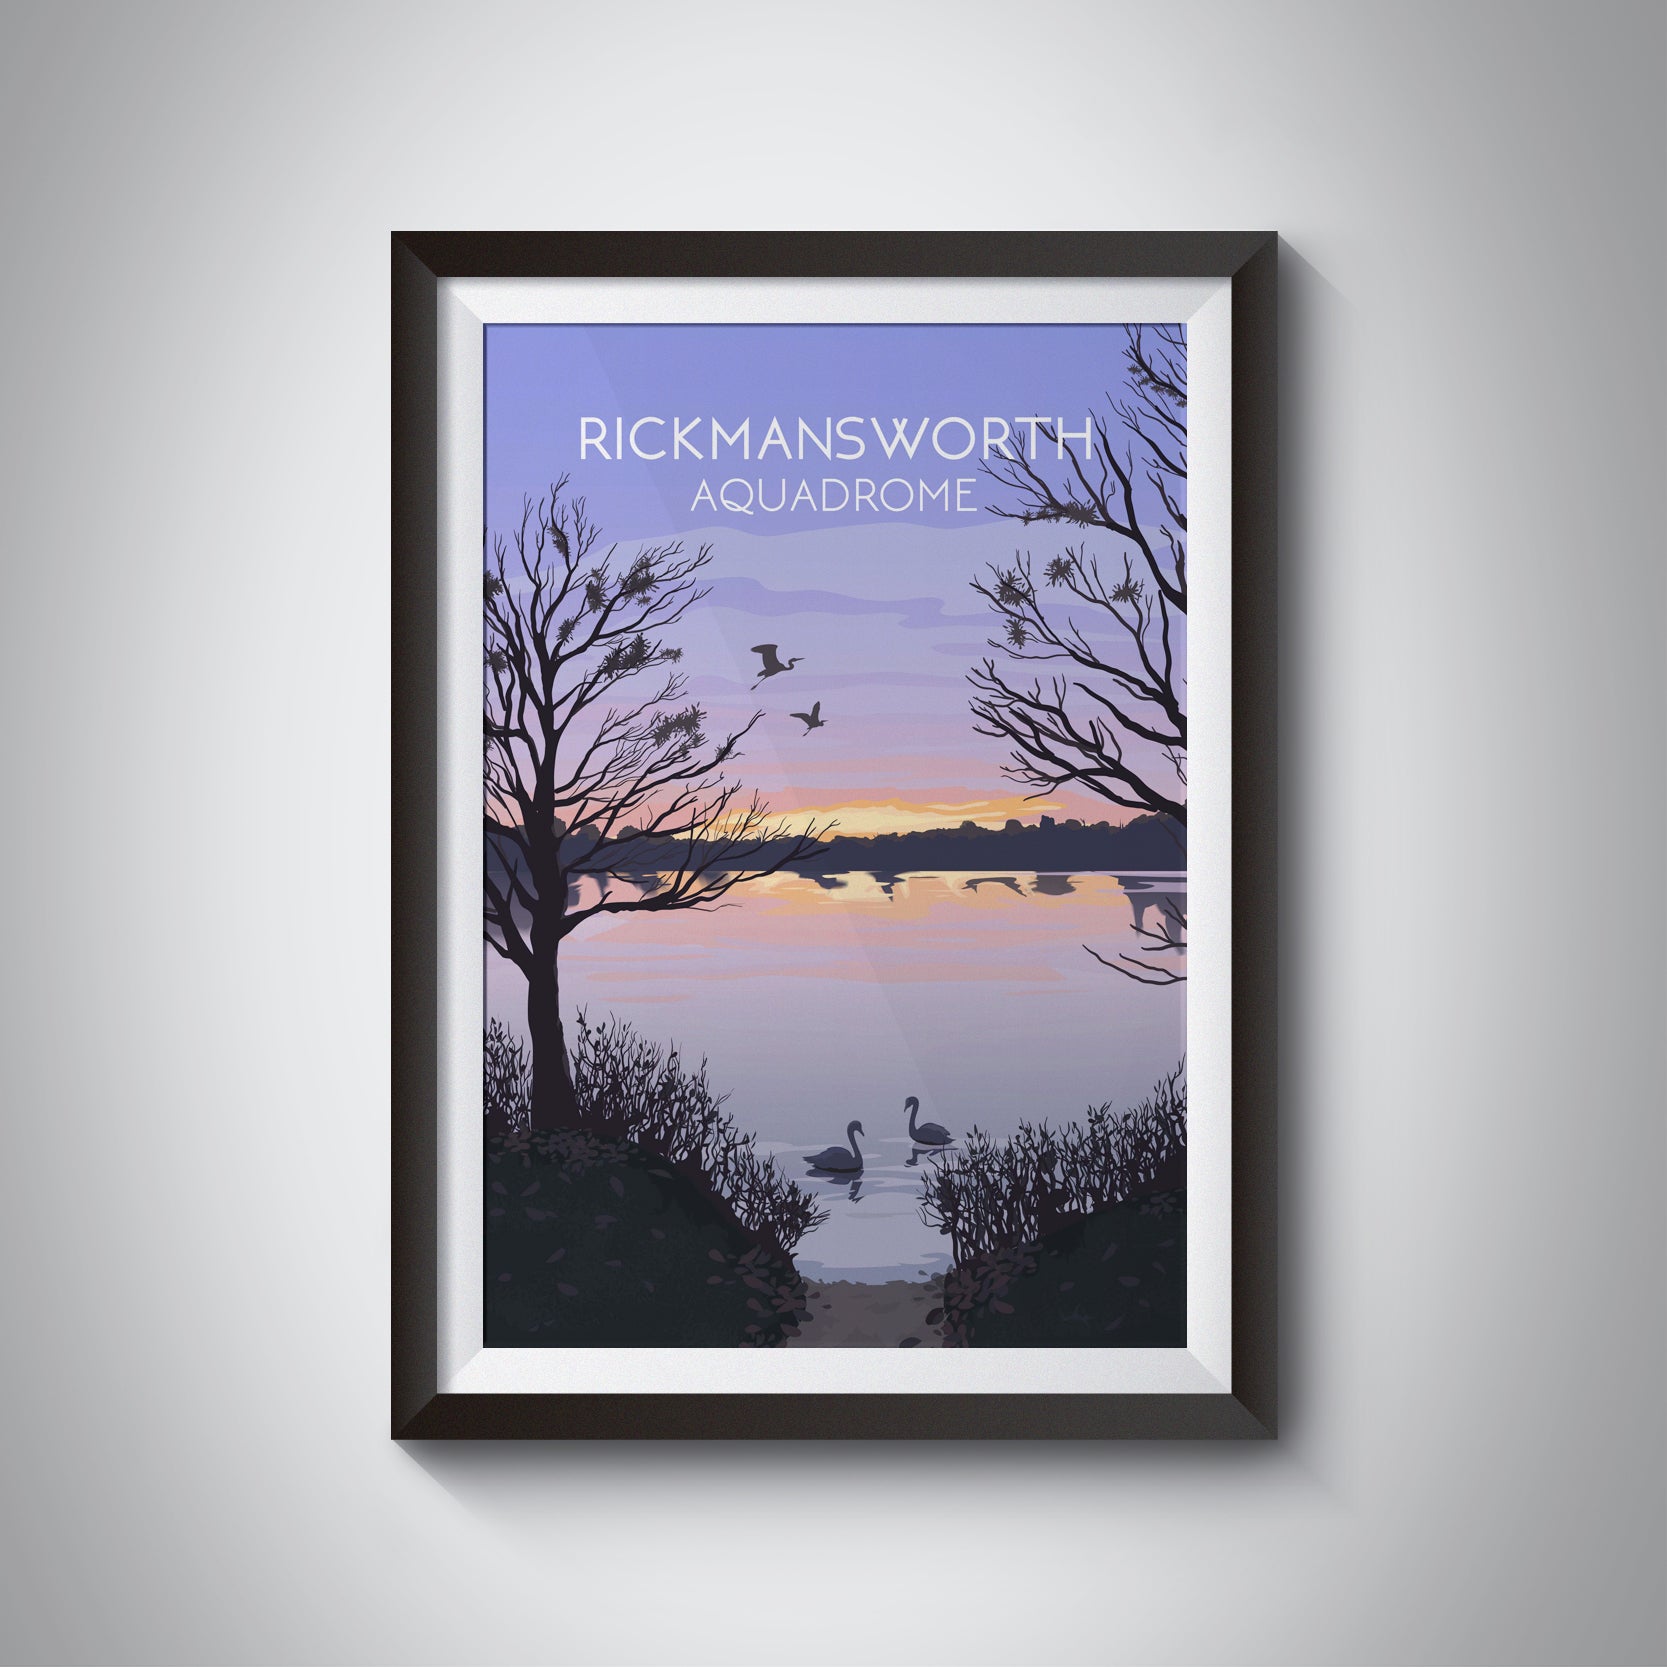 Rickmansworth Aquadrome Travel Poster